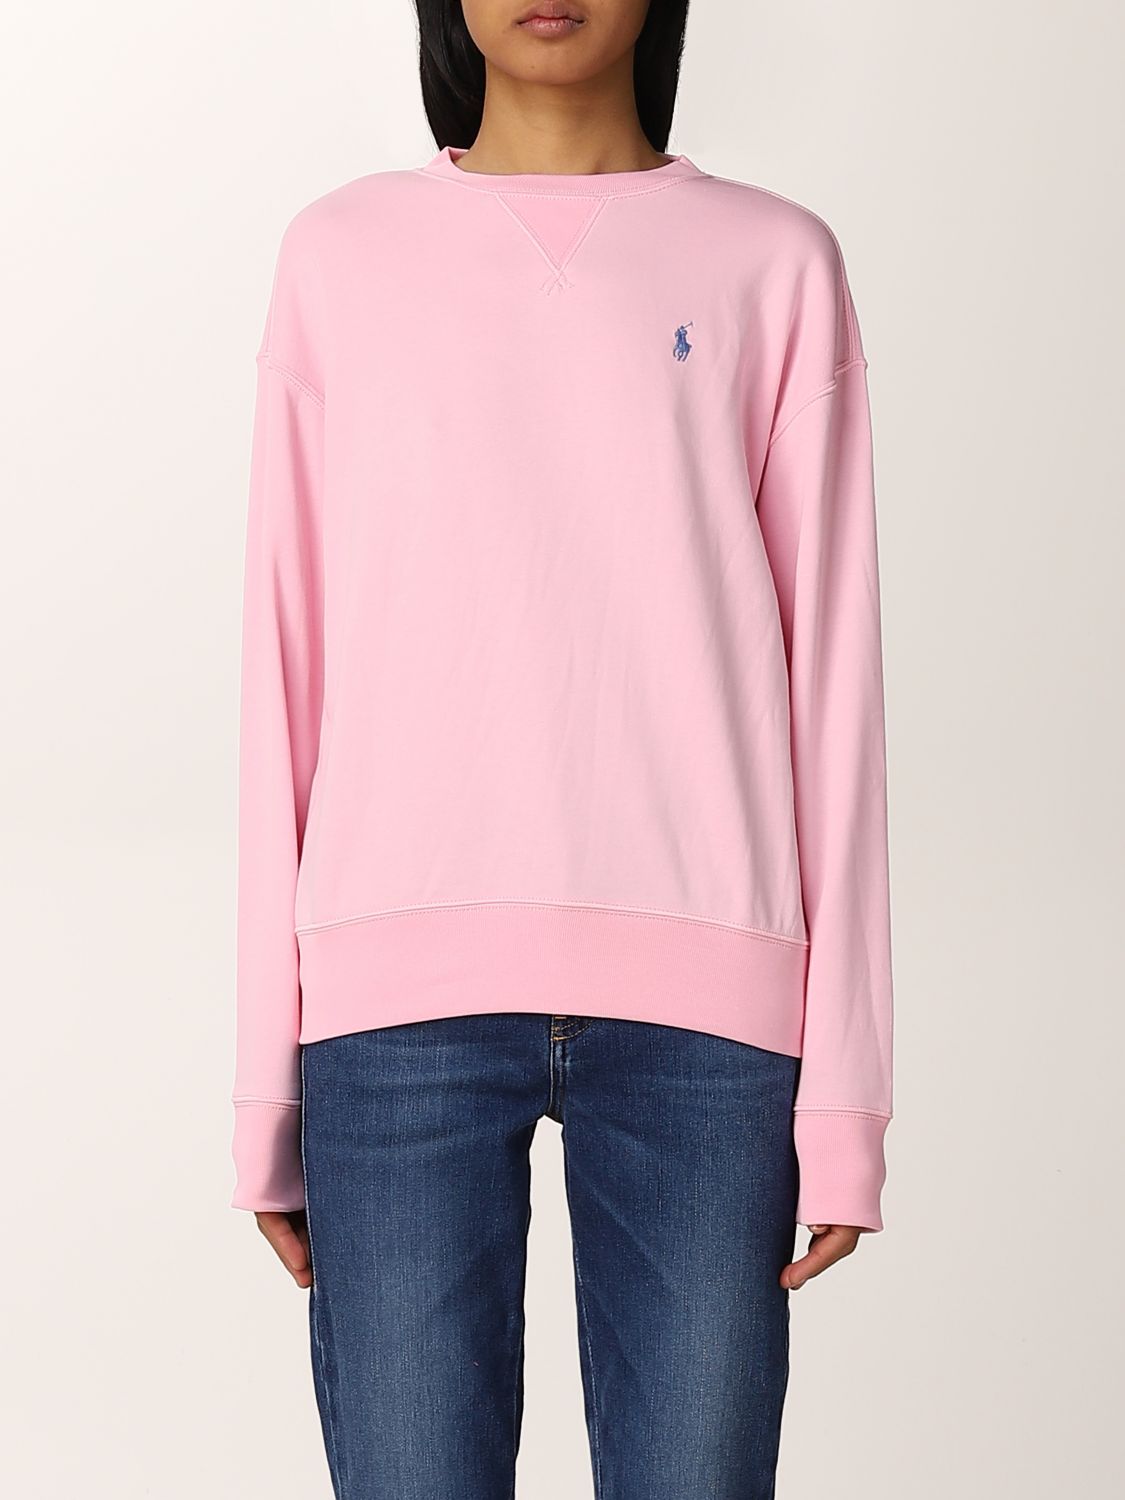 POLO RALPH LAUREN: sweatshirt with embroidered logo - Pink | Polo Ralph  Lauren sweatshirt 211780304 online on 